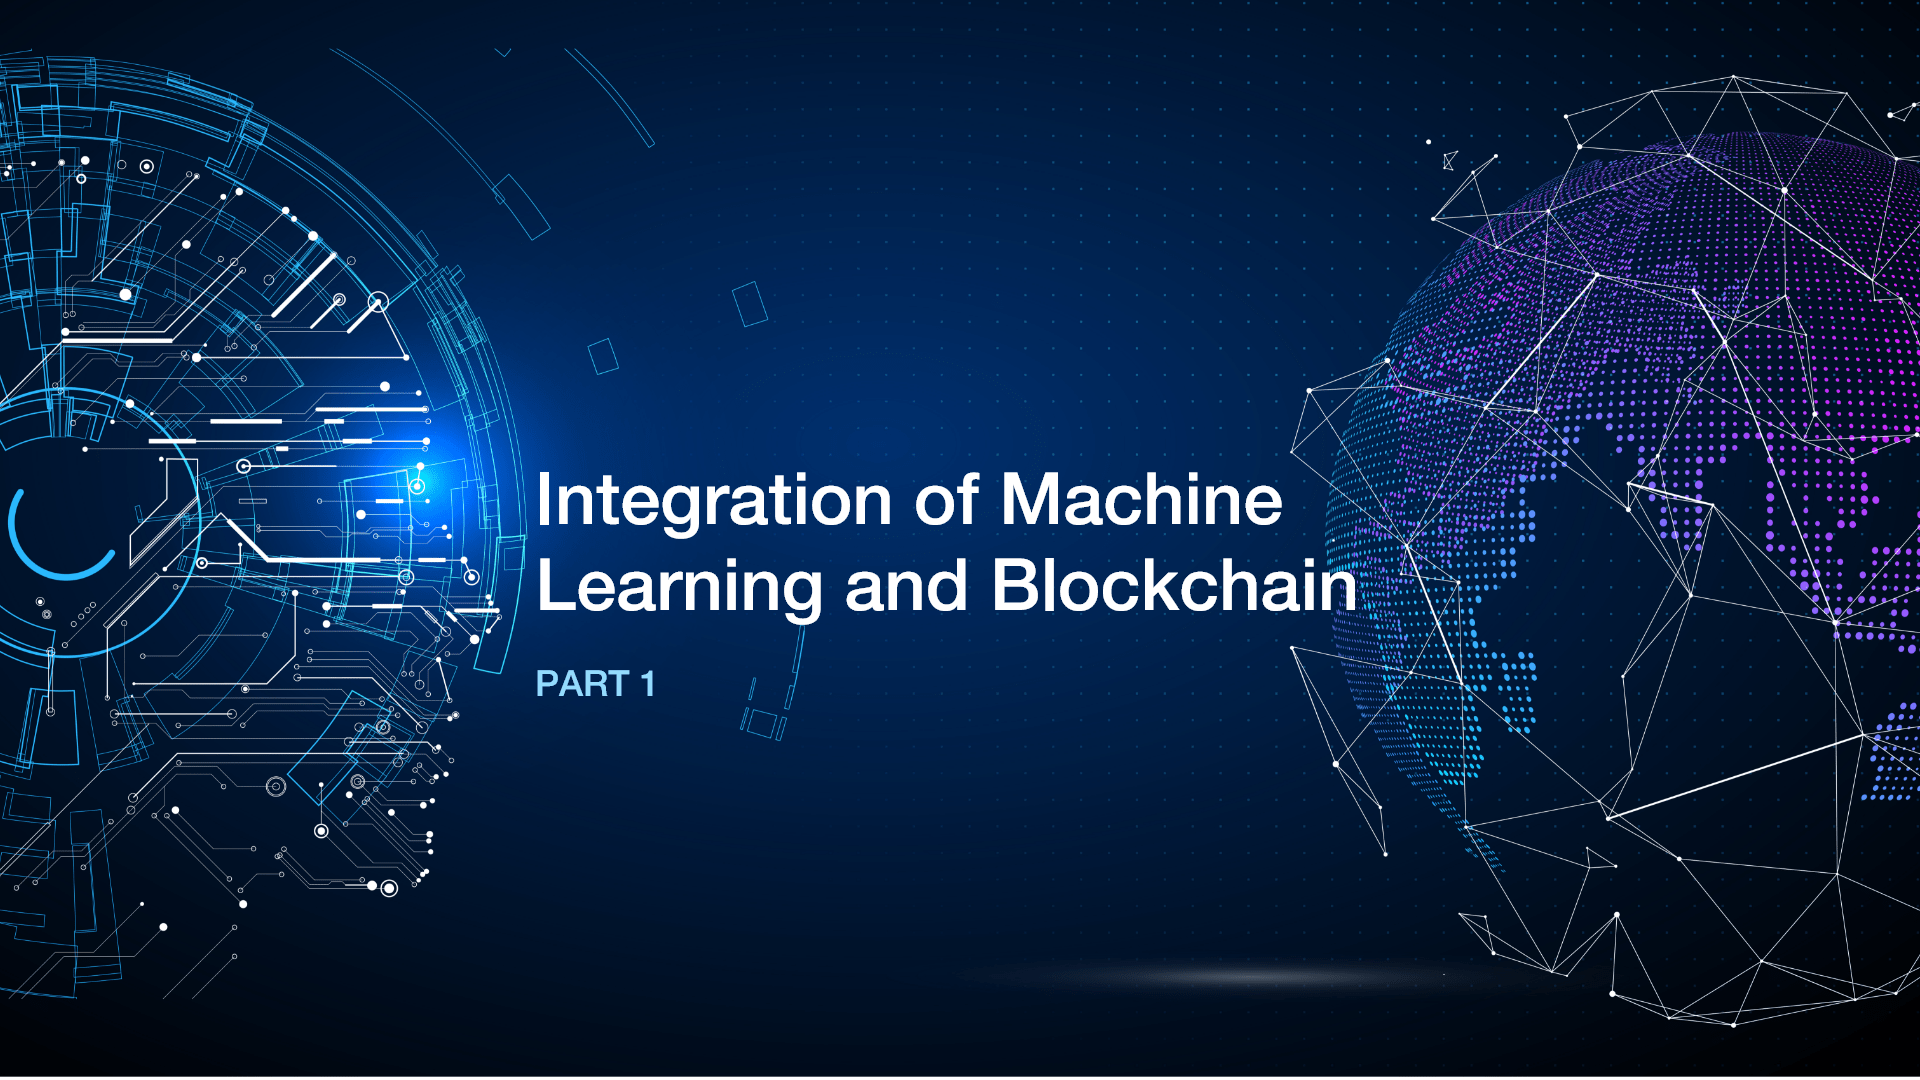 Intergration of machine learning and blockchain part 1 - 47Billion